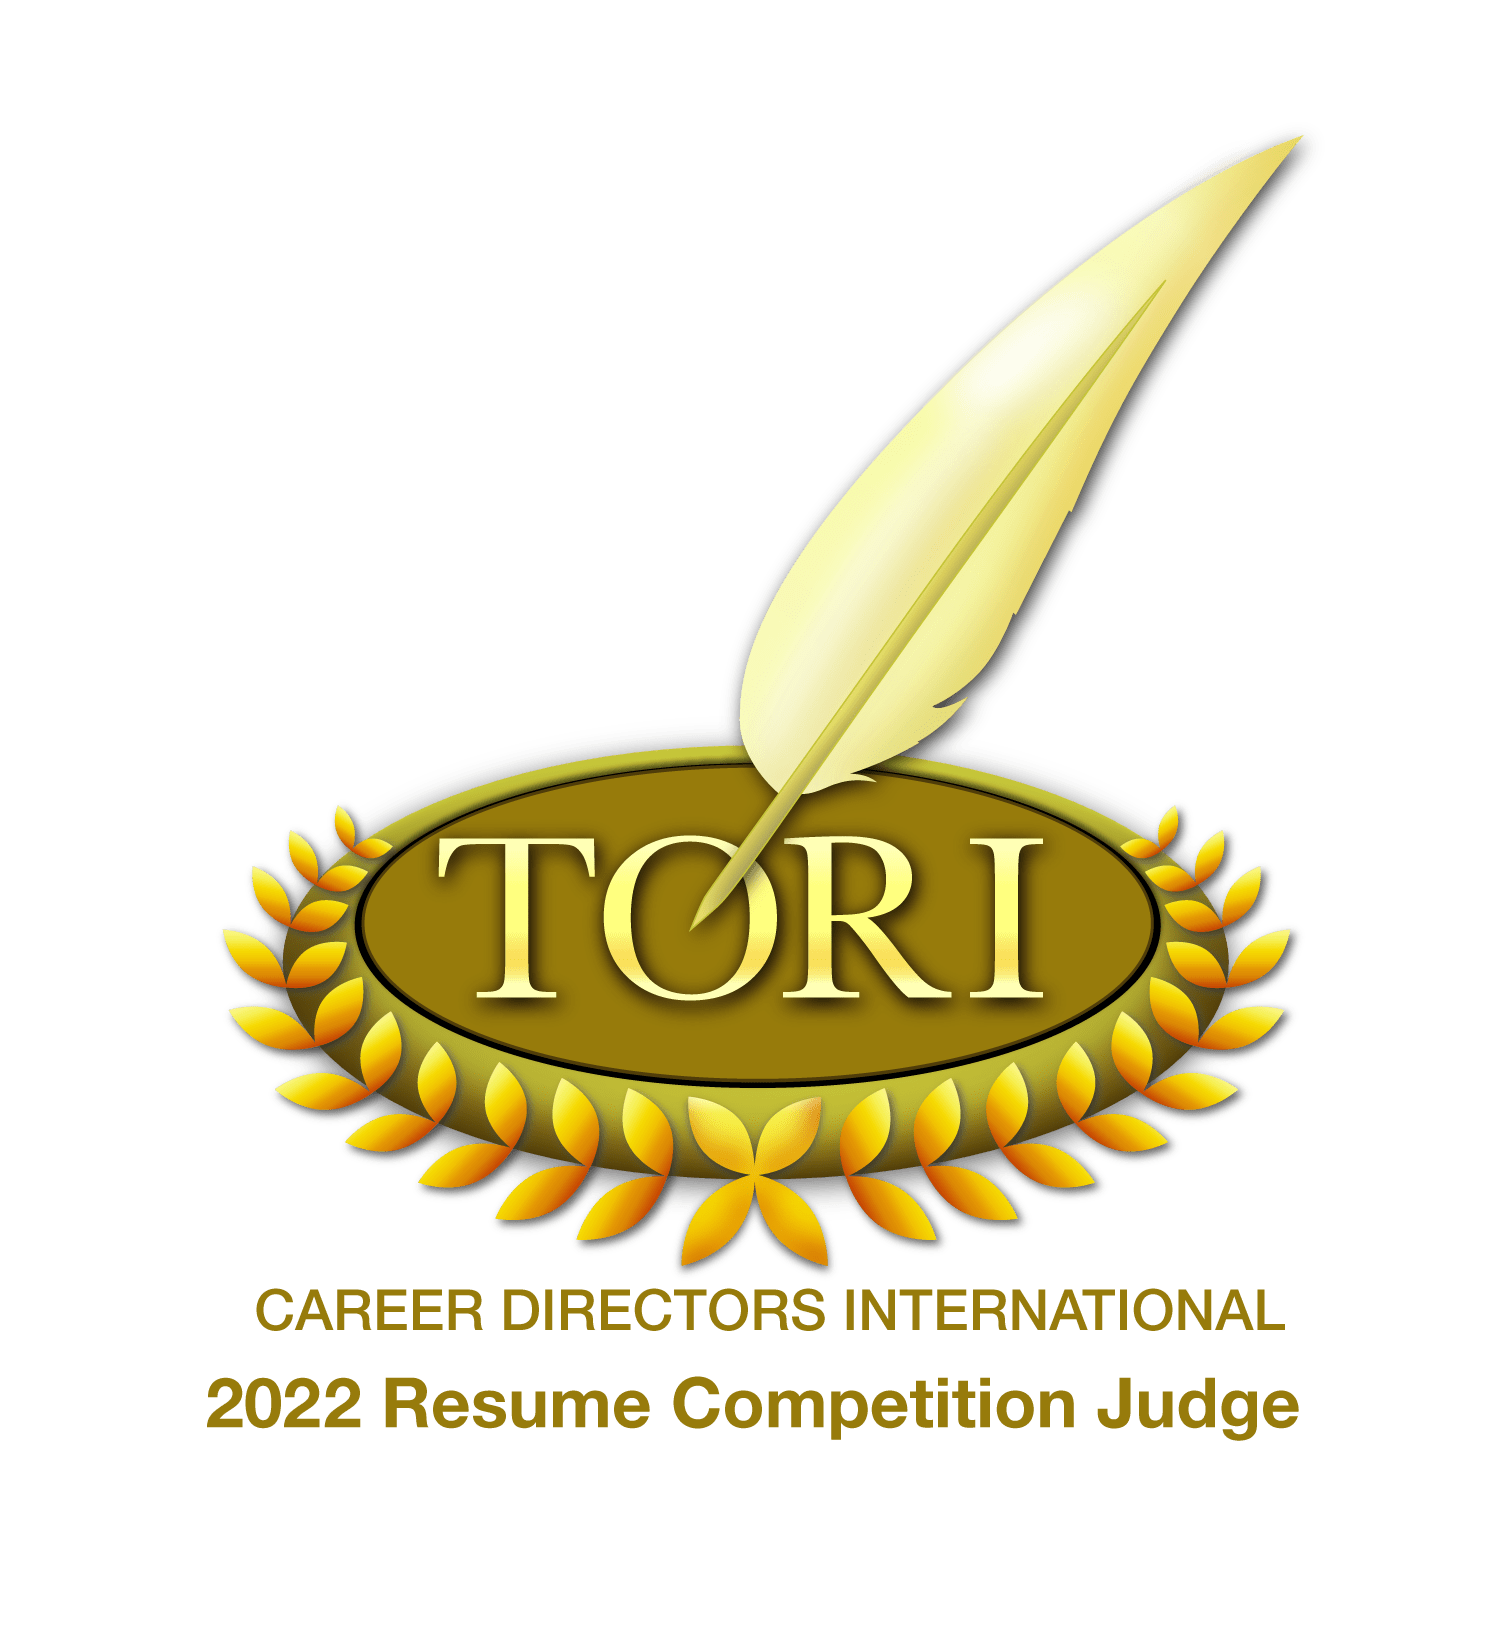 TORI AWD 2022 RESUME COMPETITION JUDGE